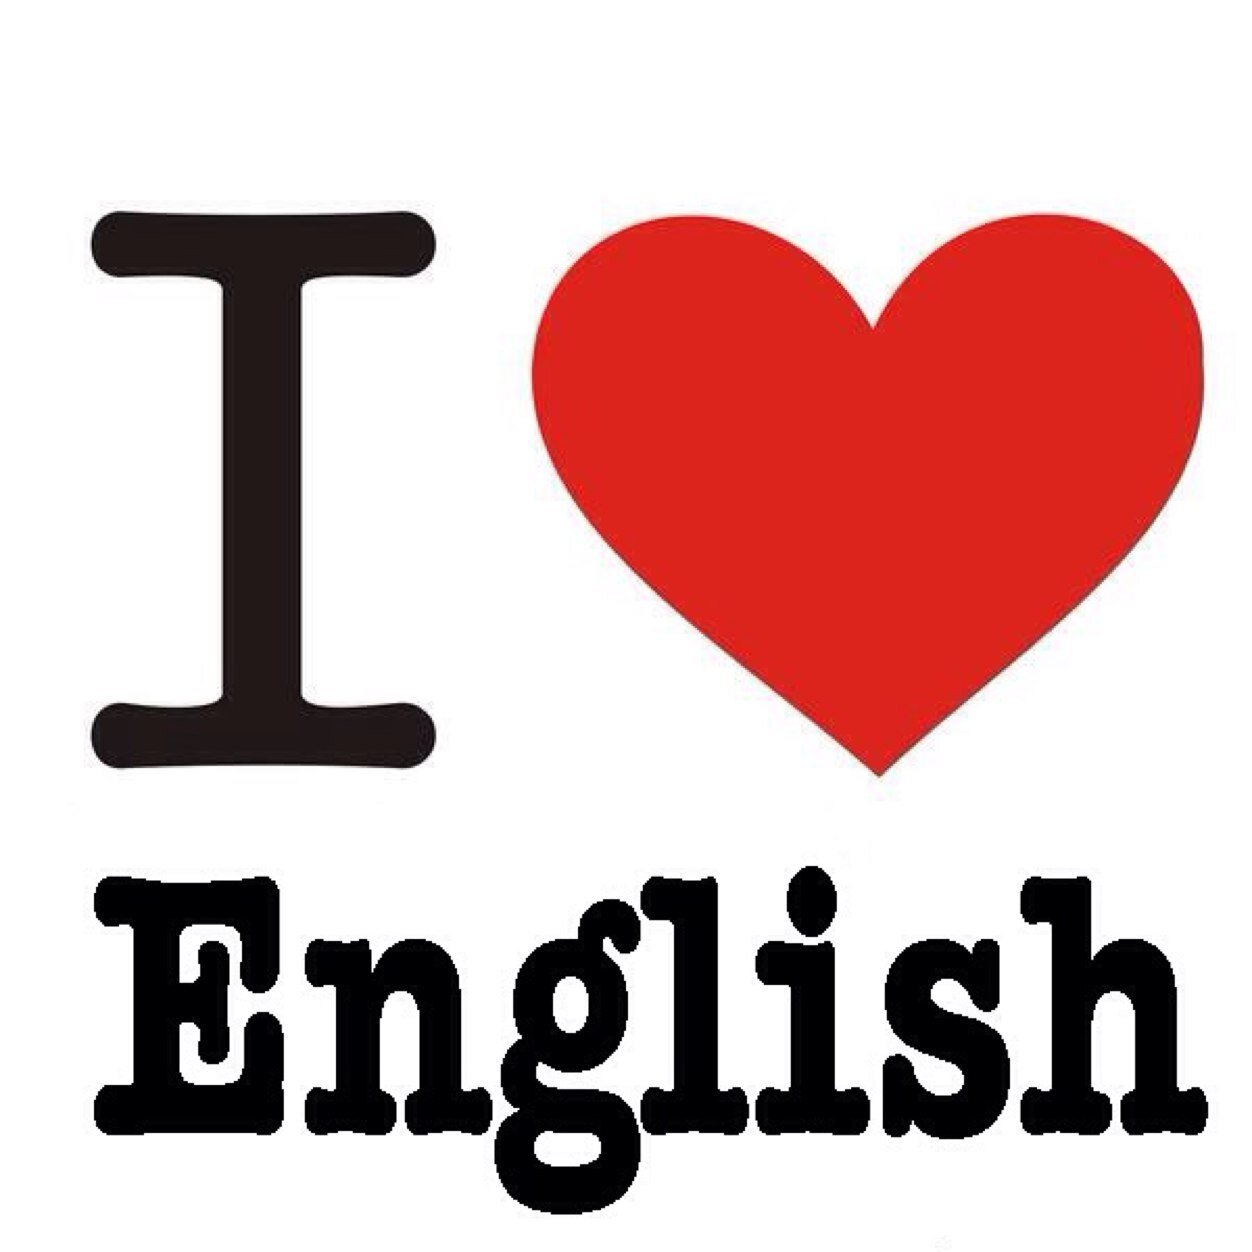 Ай спик инглиш. Я люблю английский. I Love English надпись. Люблю английский язык. Люблю на английском.